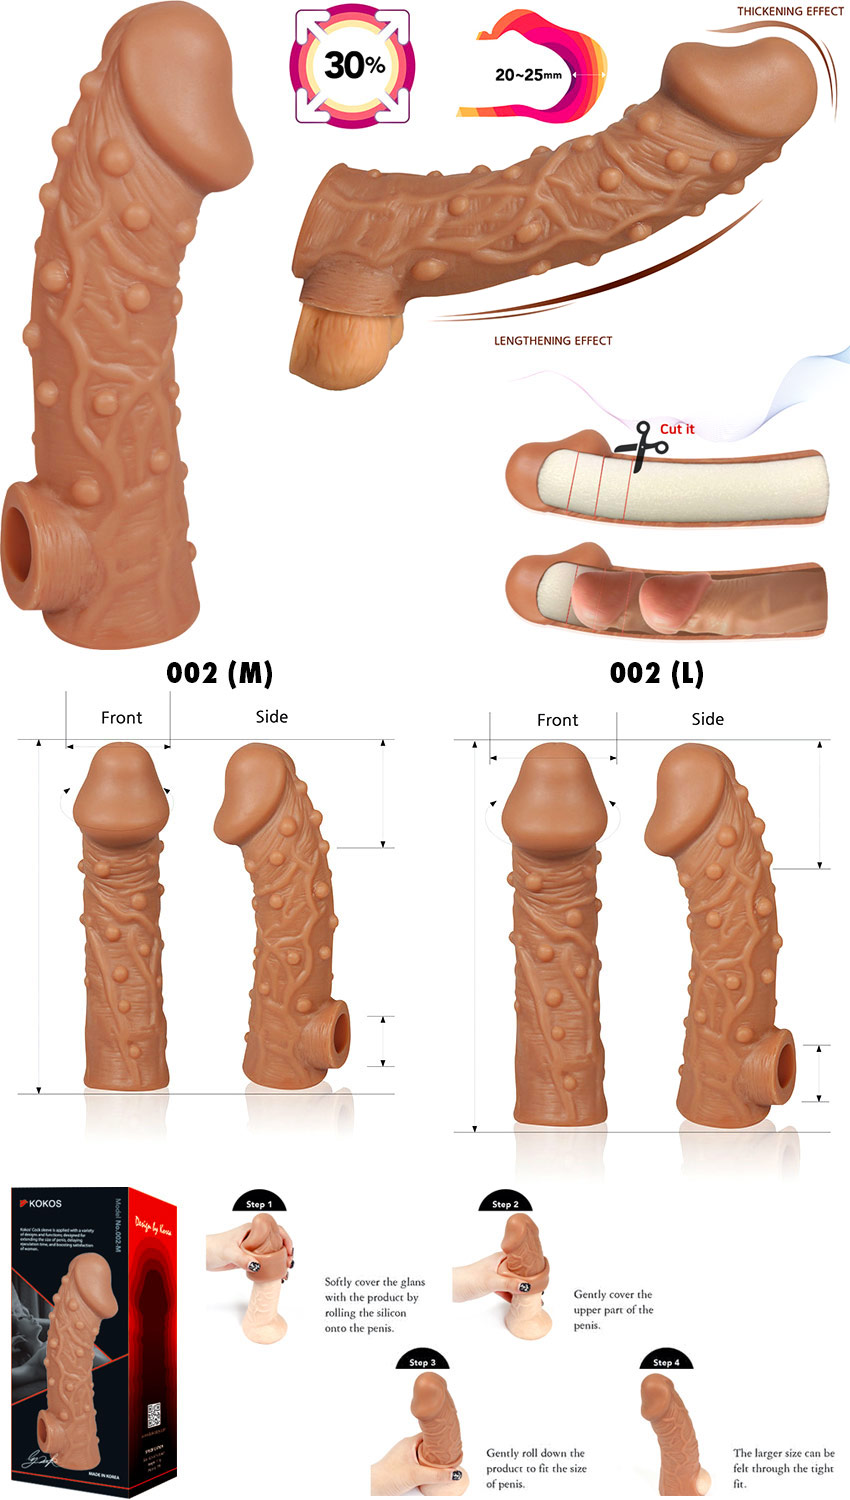 Kokos 002 stimulating and enlarging penis sleeve (M)